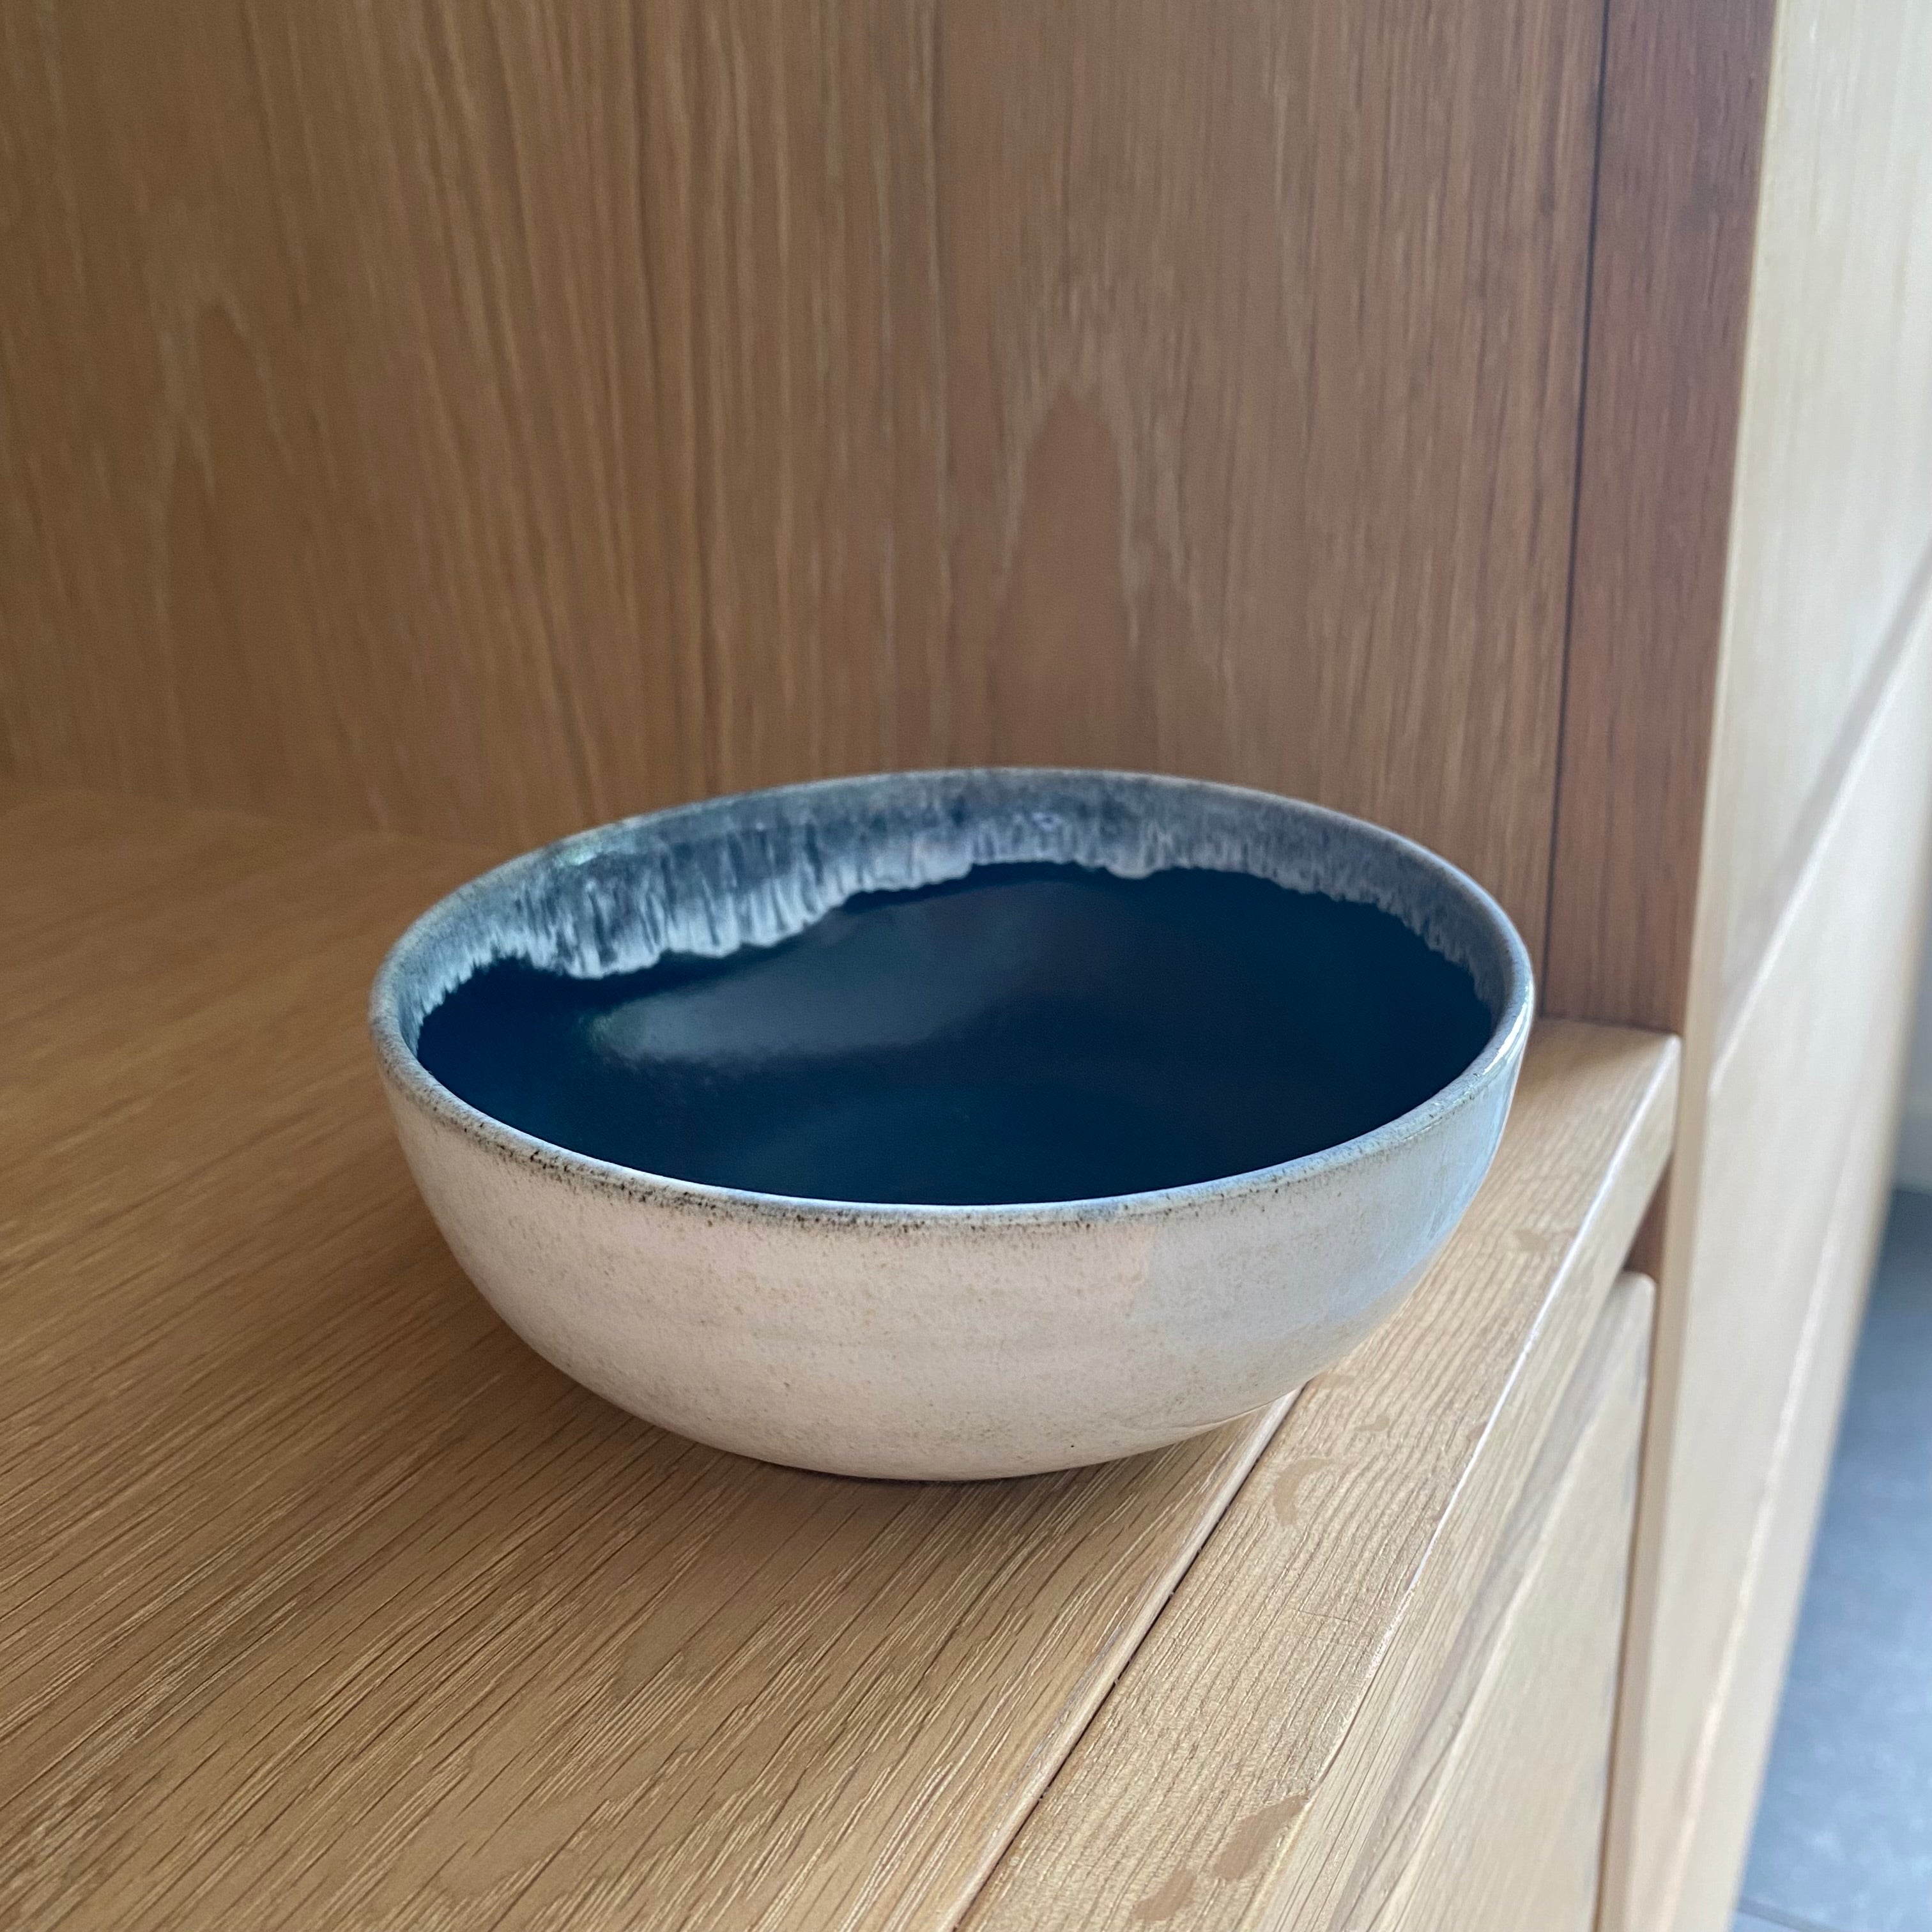 Tasja P small breakfast bowl - off white and dark blue